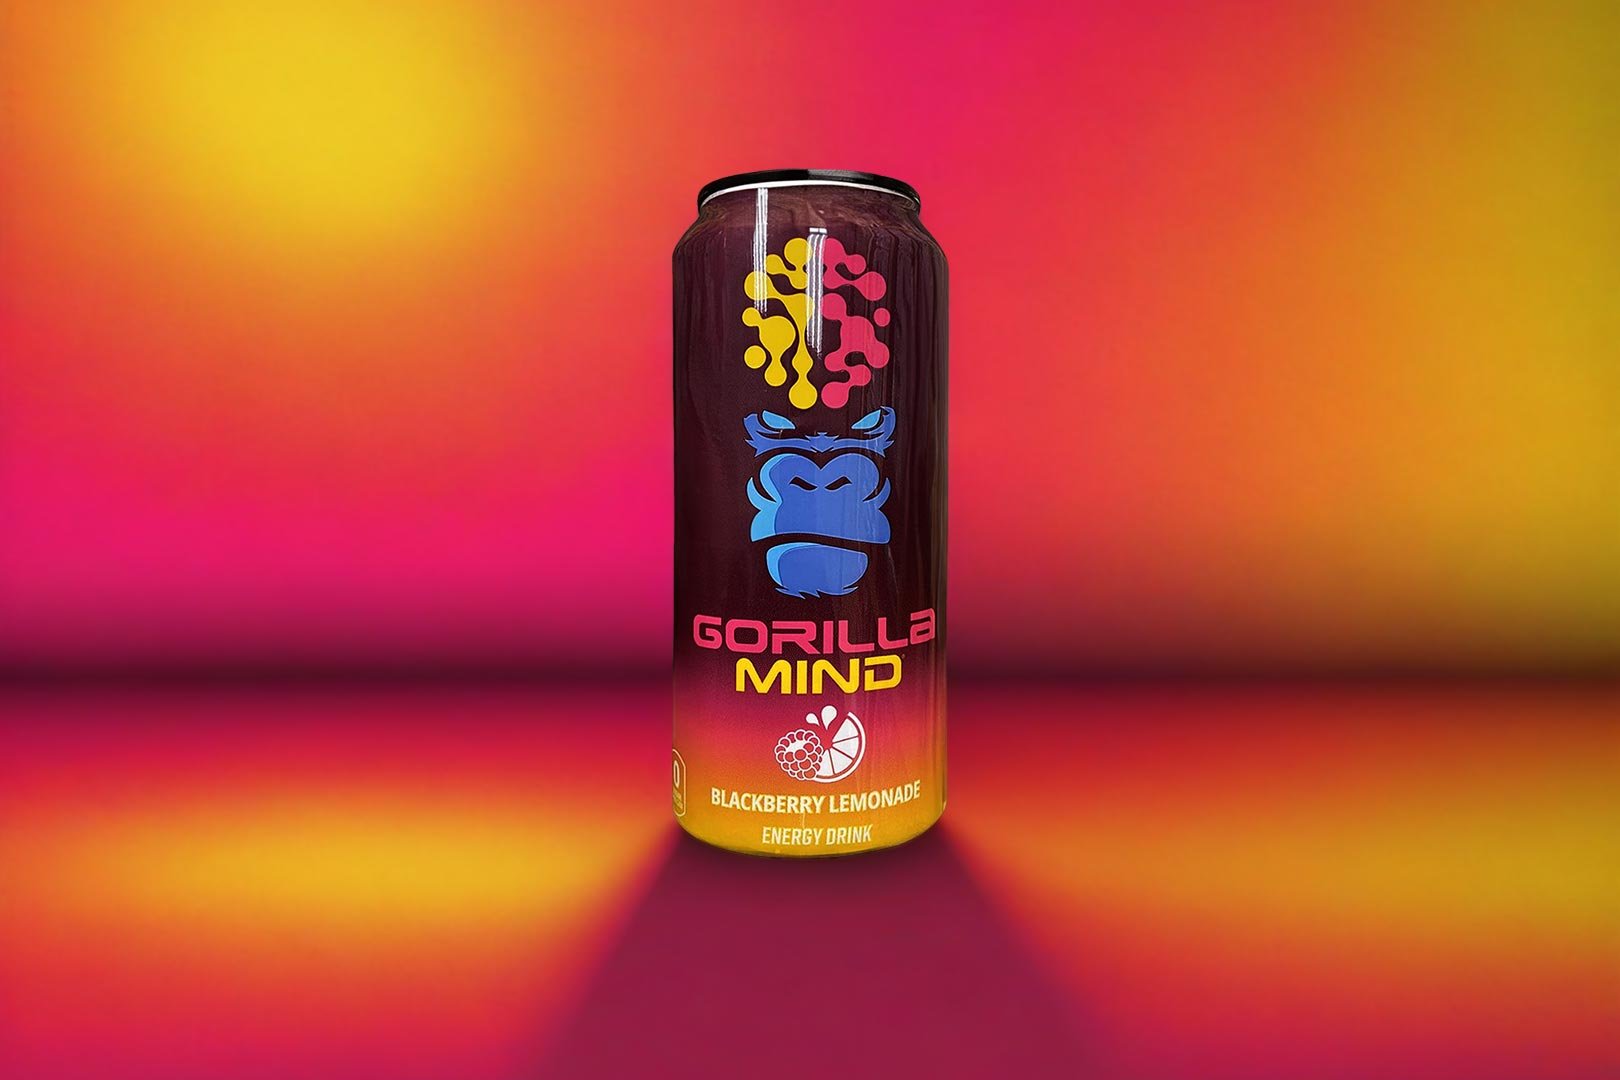 Blackberry Lemonade Gorilla Mind Energy Drink